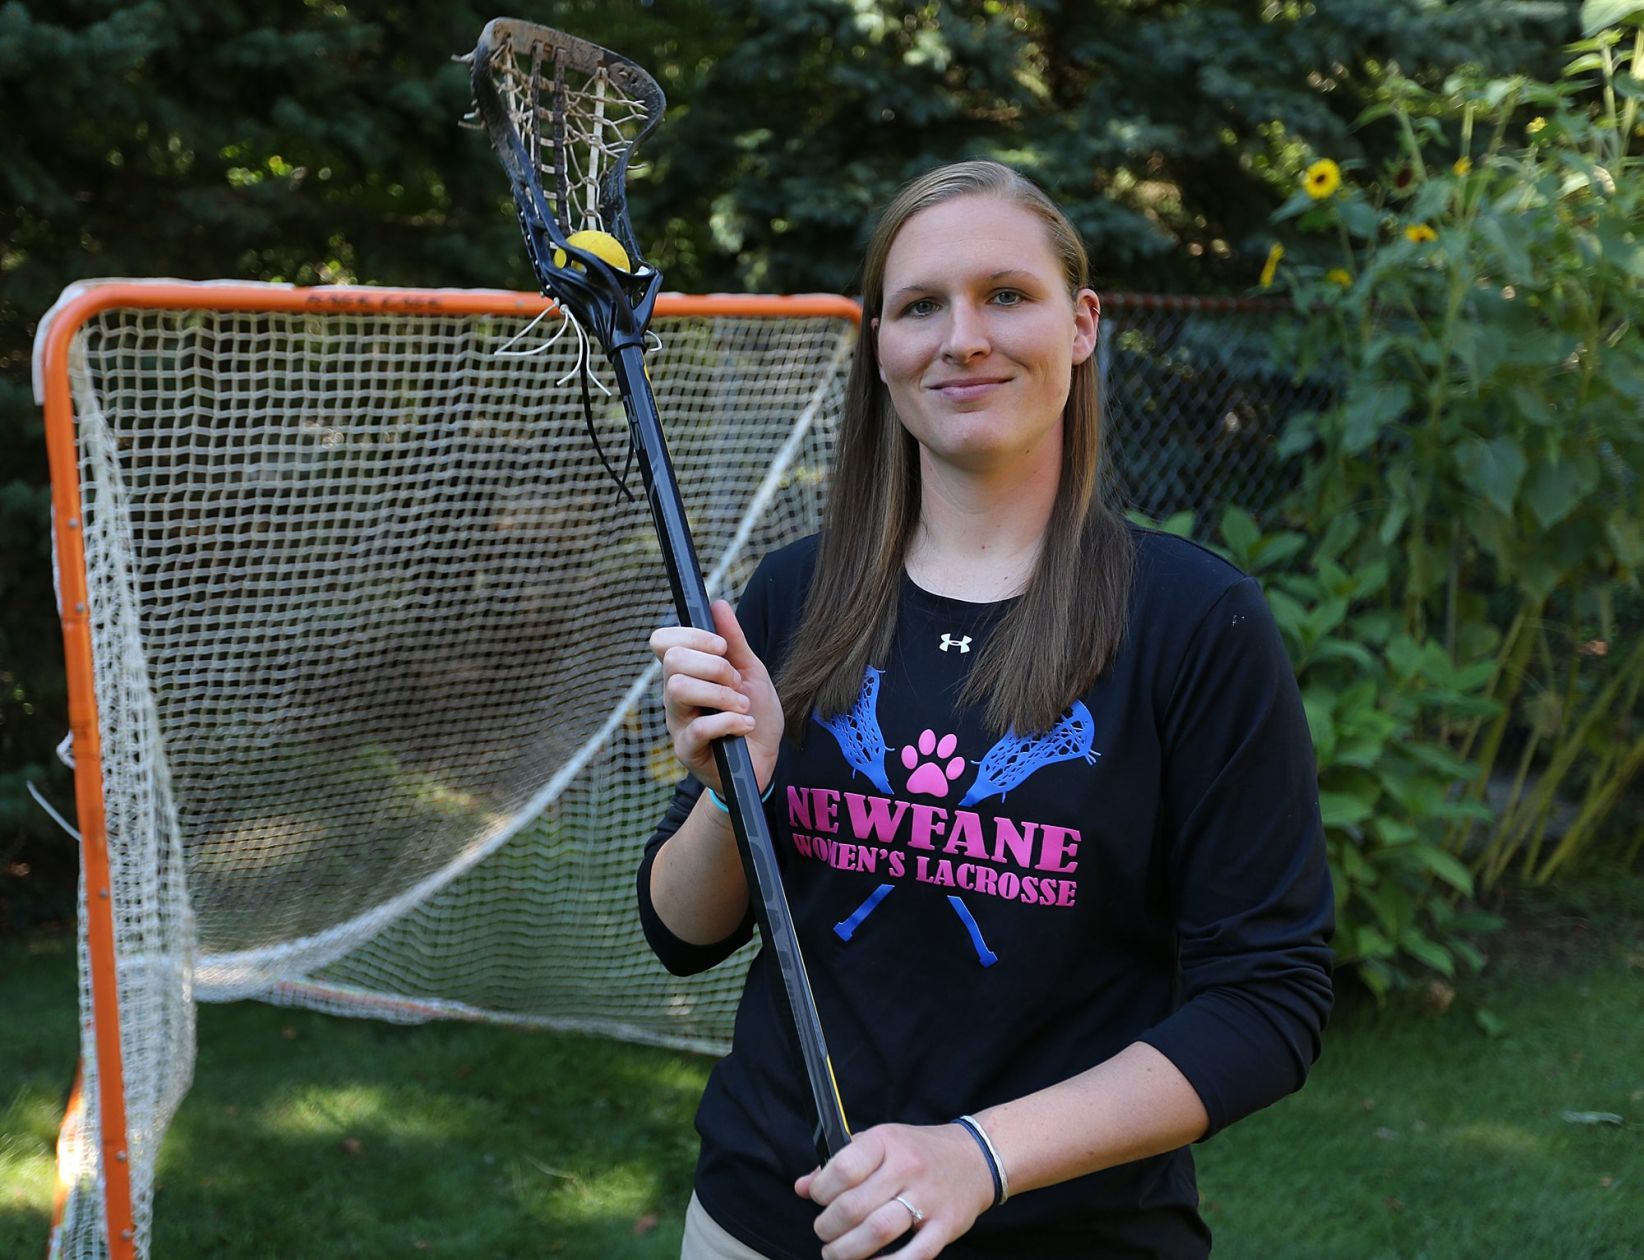 Newfane womens lacrosse coach is focused on one goal